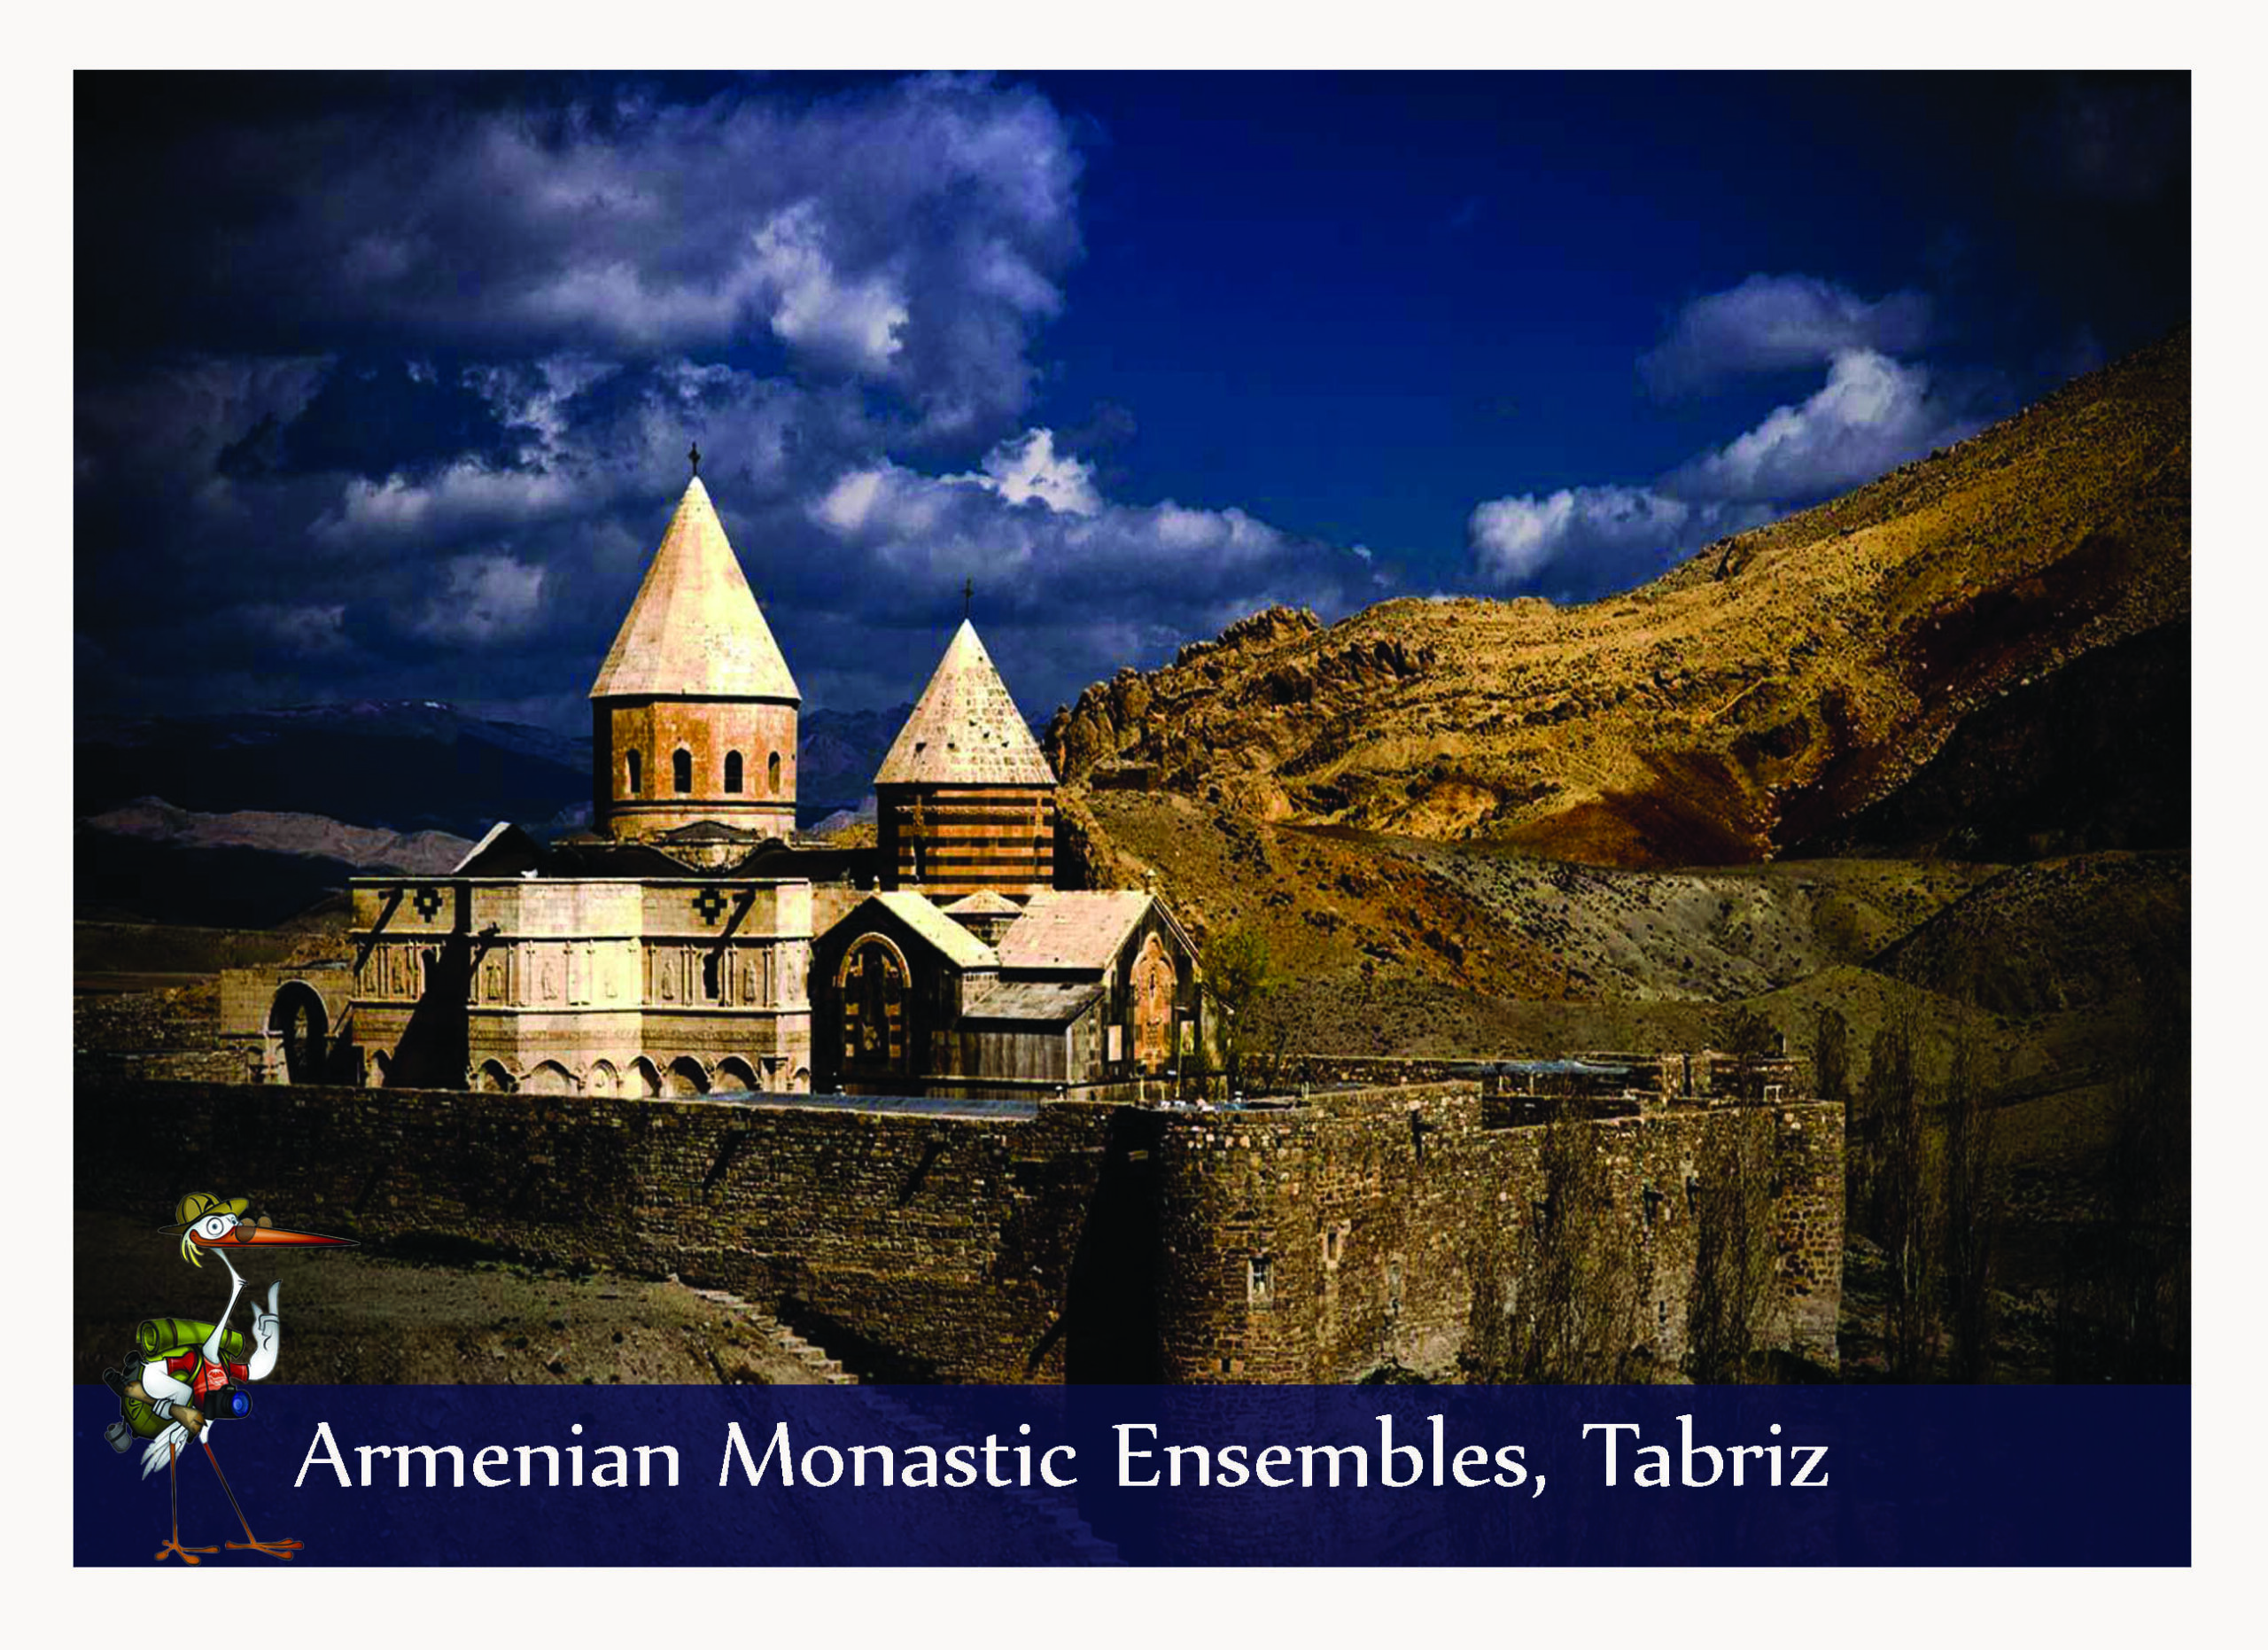 Armenian Monastic ensembles